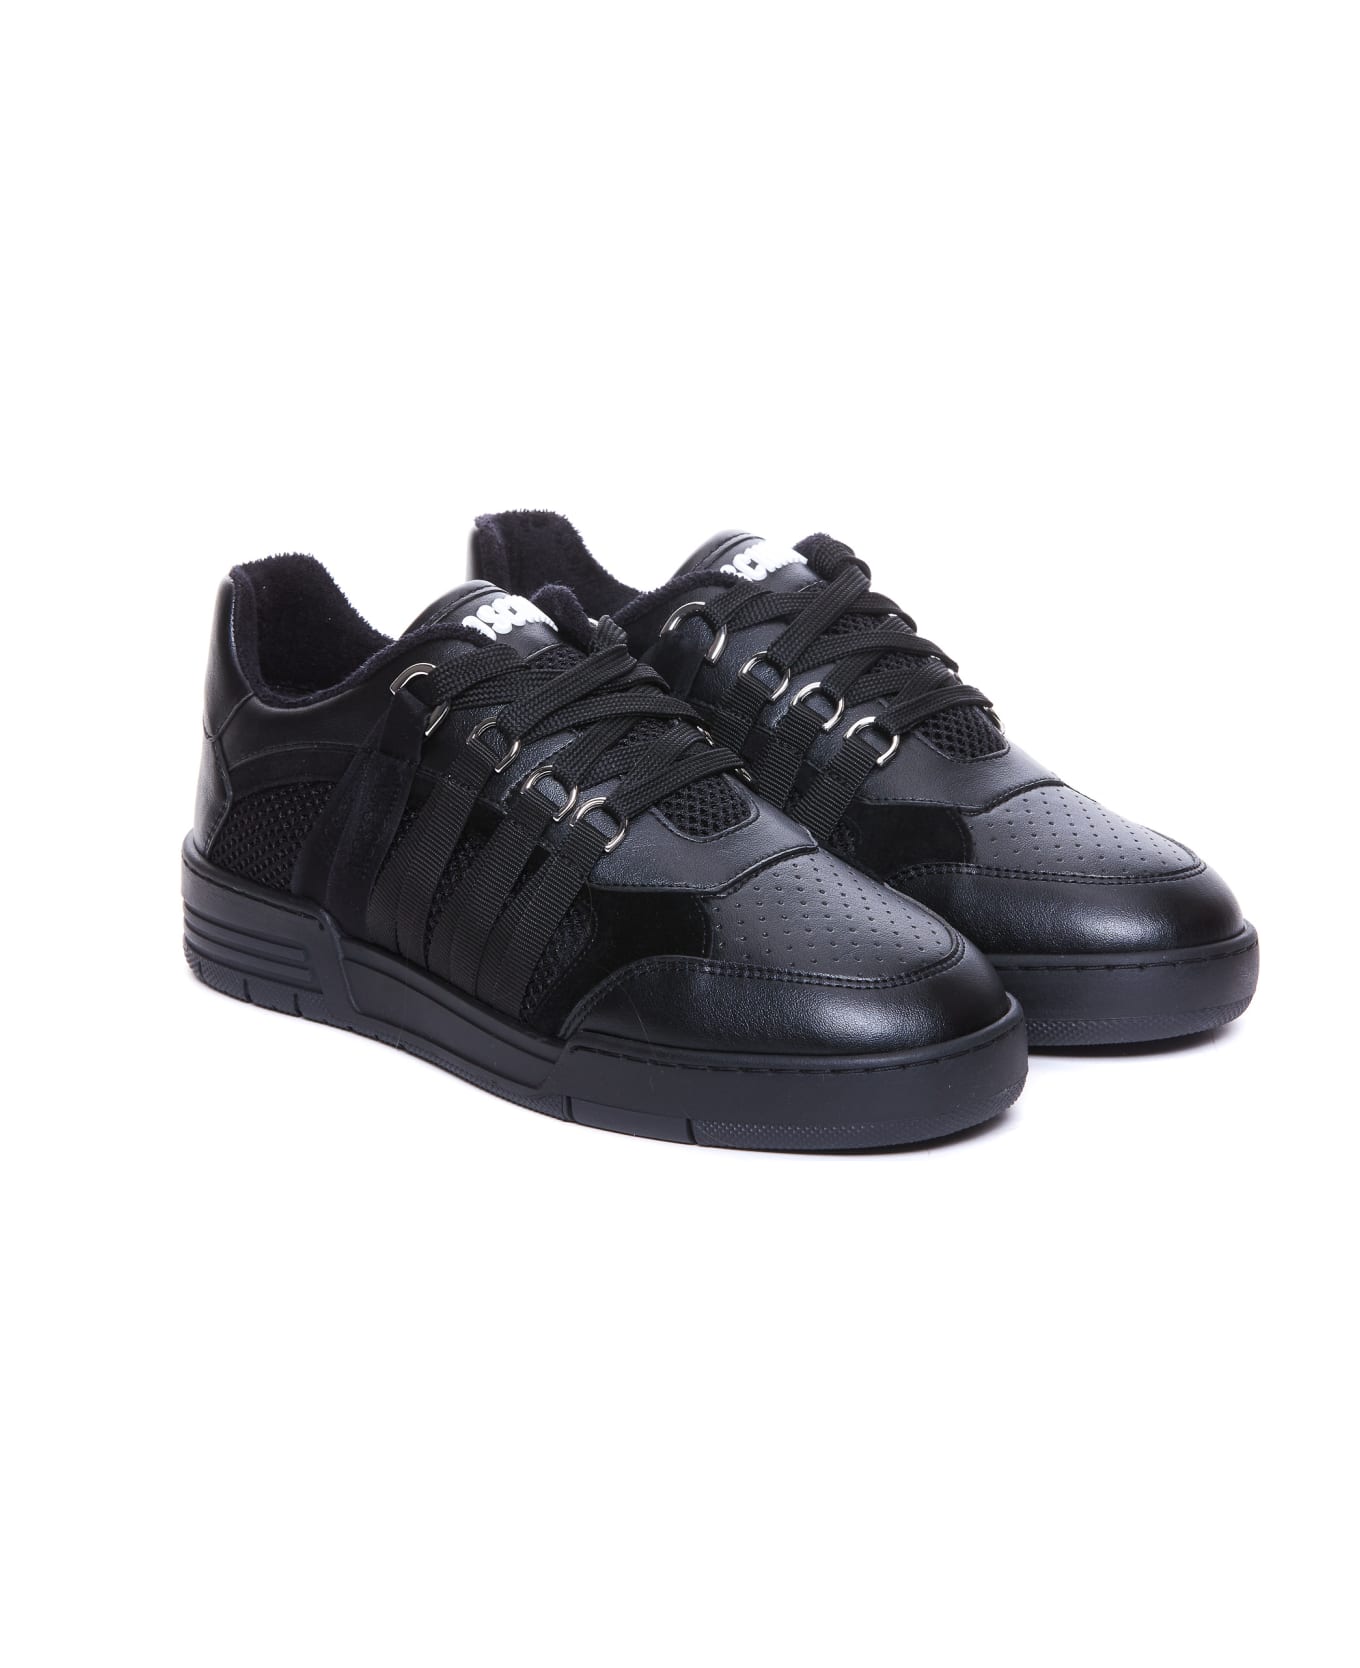 Moschino Streetball Sneakers - Black